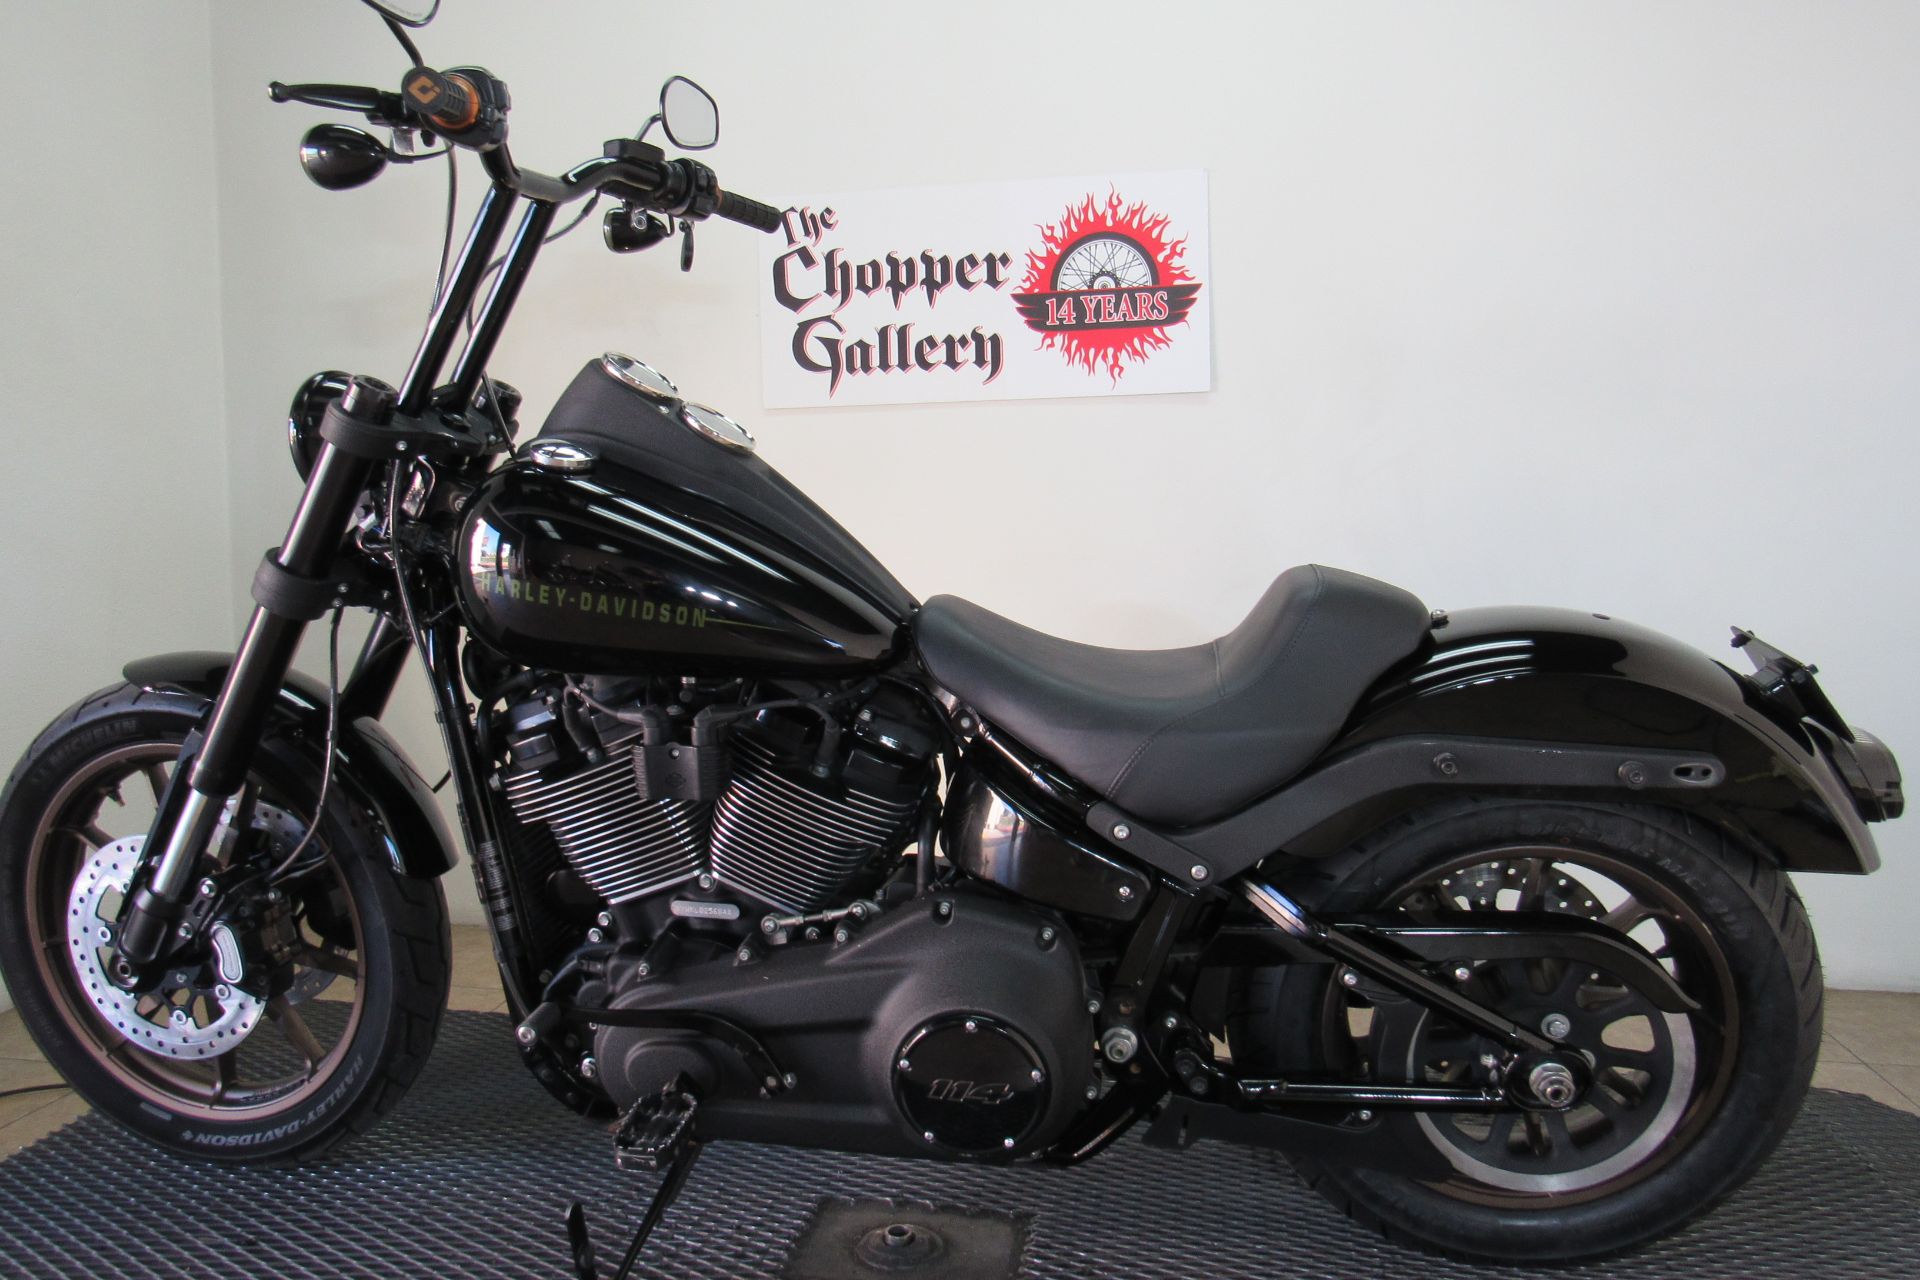 2020 Harley-Davidson Low Rider®S in Temecula, California - Photo 6